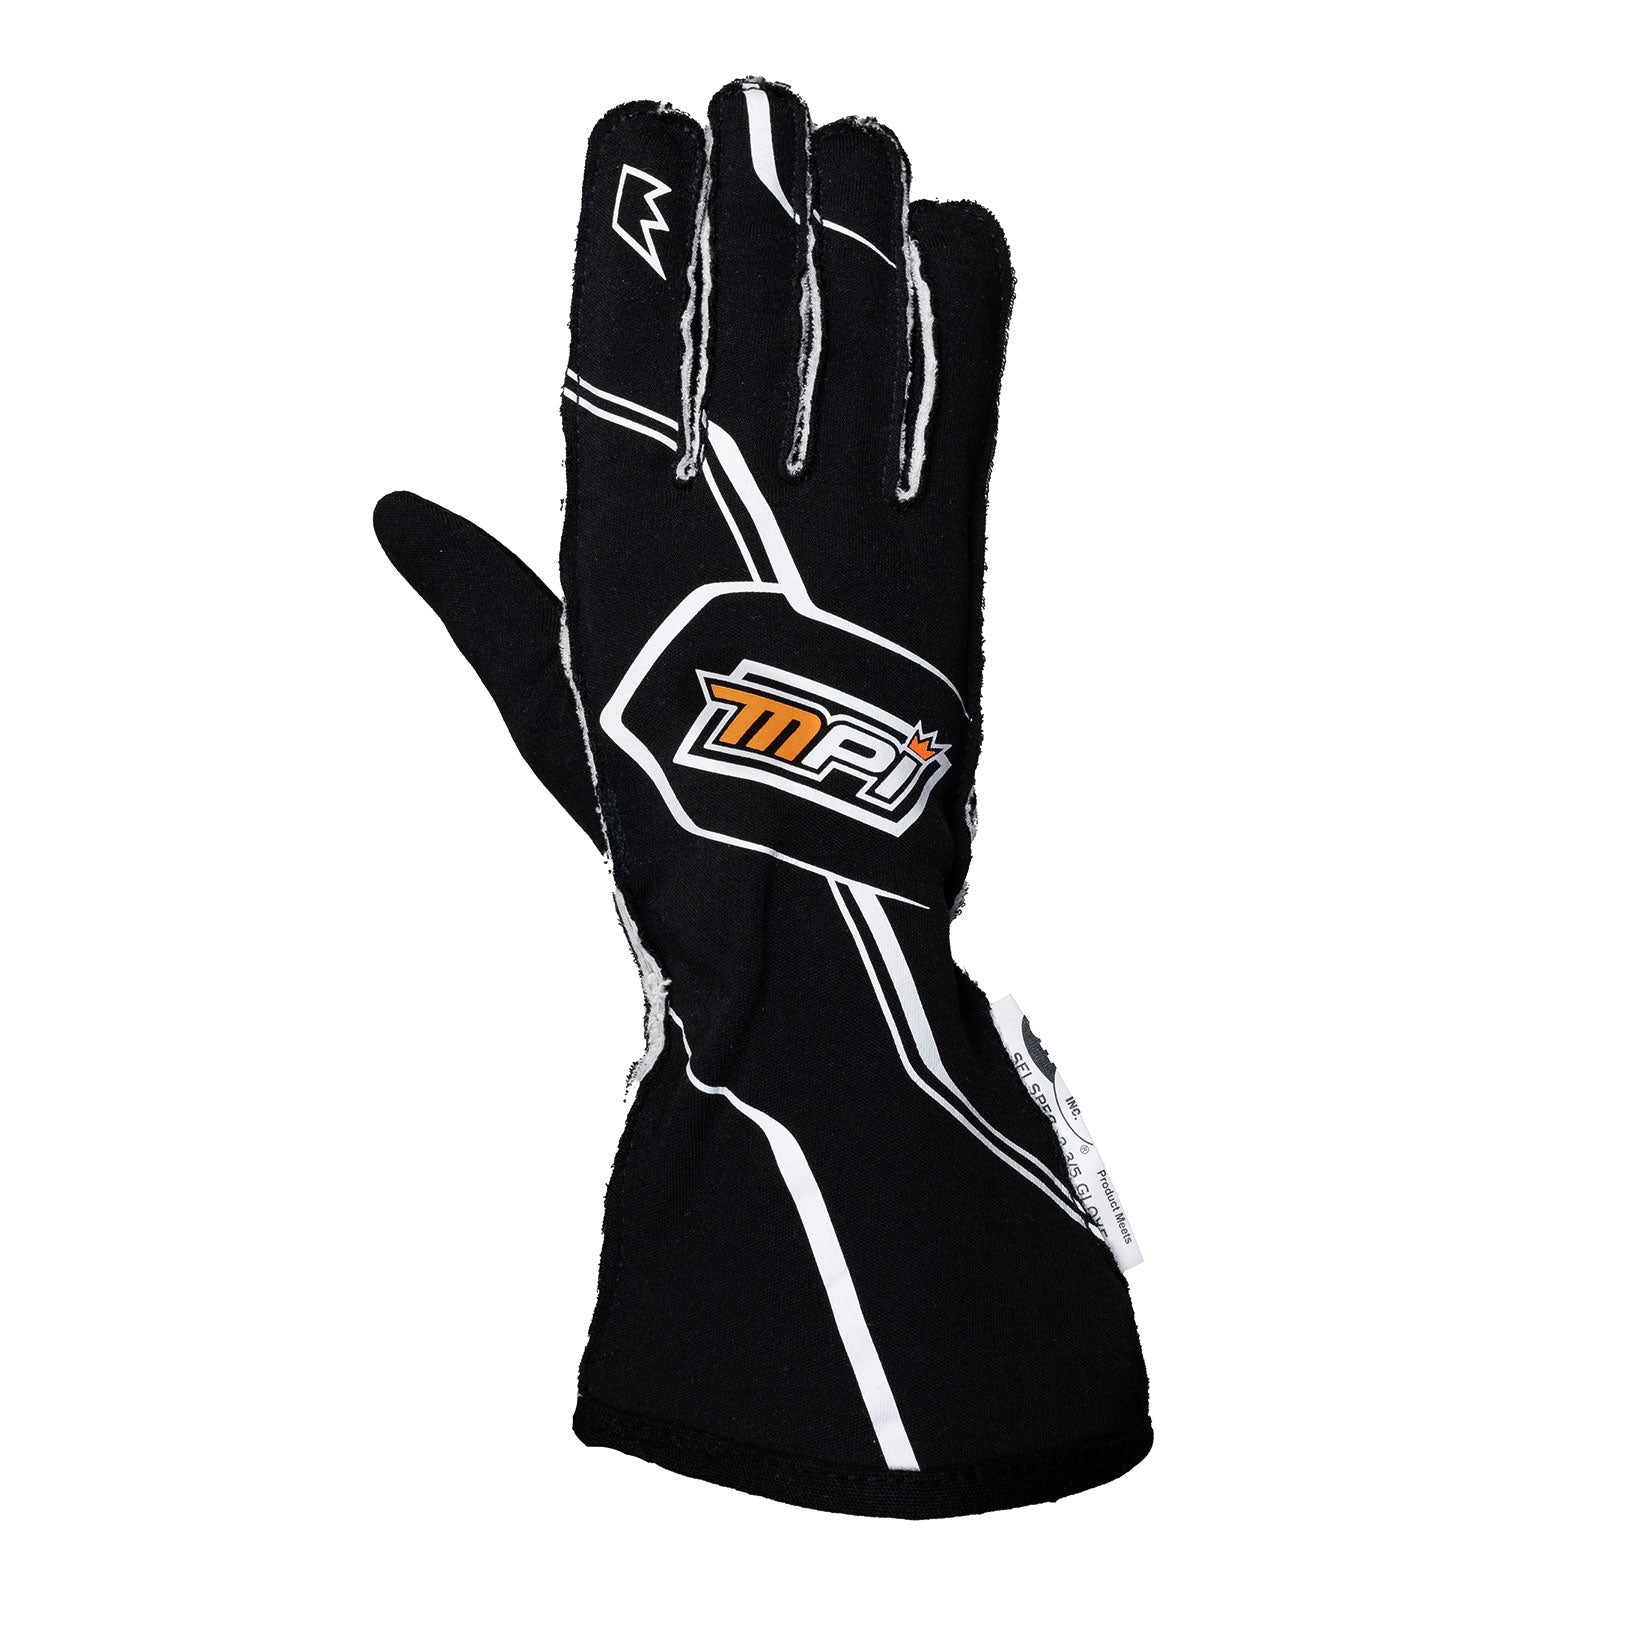 Max Papis Innovations Racing Gloves Black M MPI display